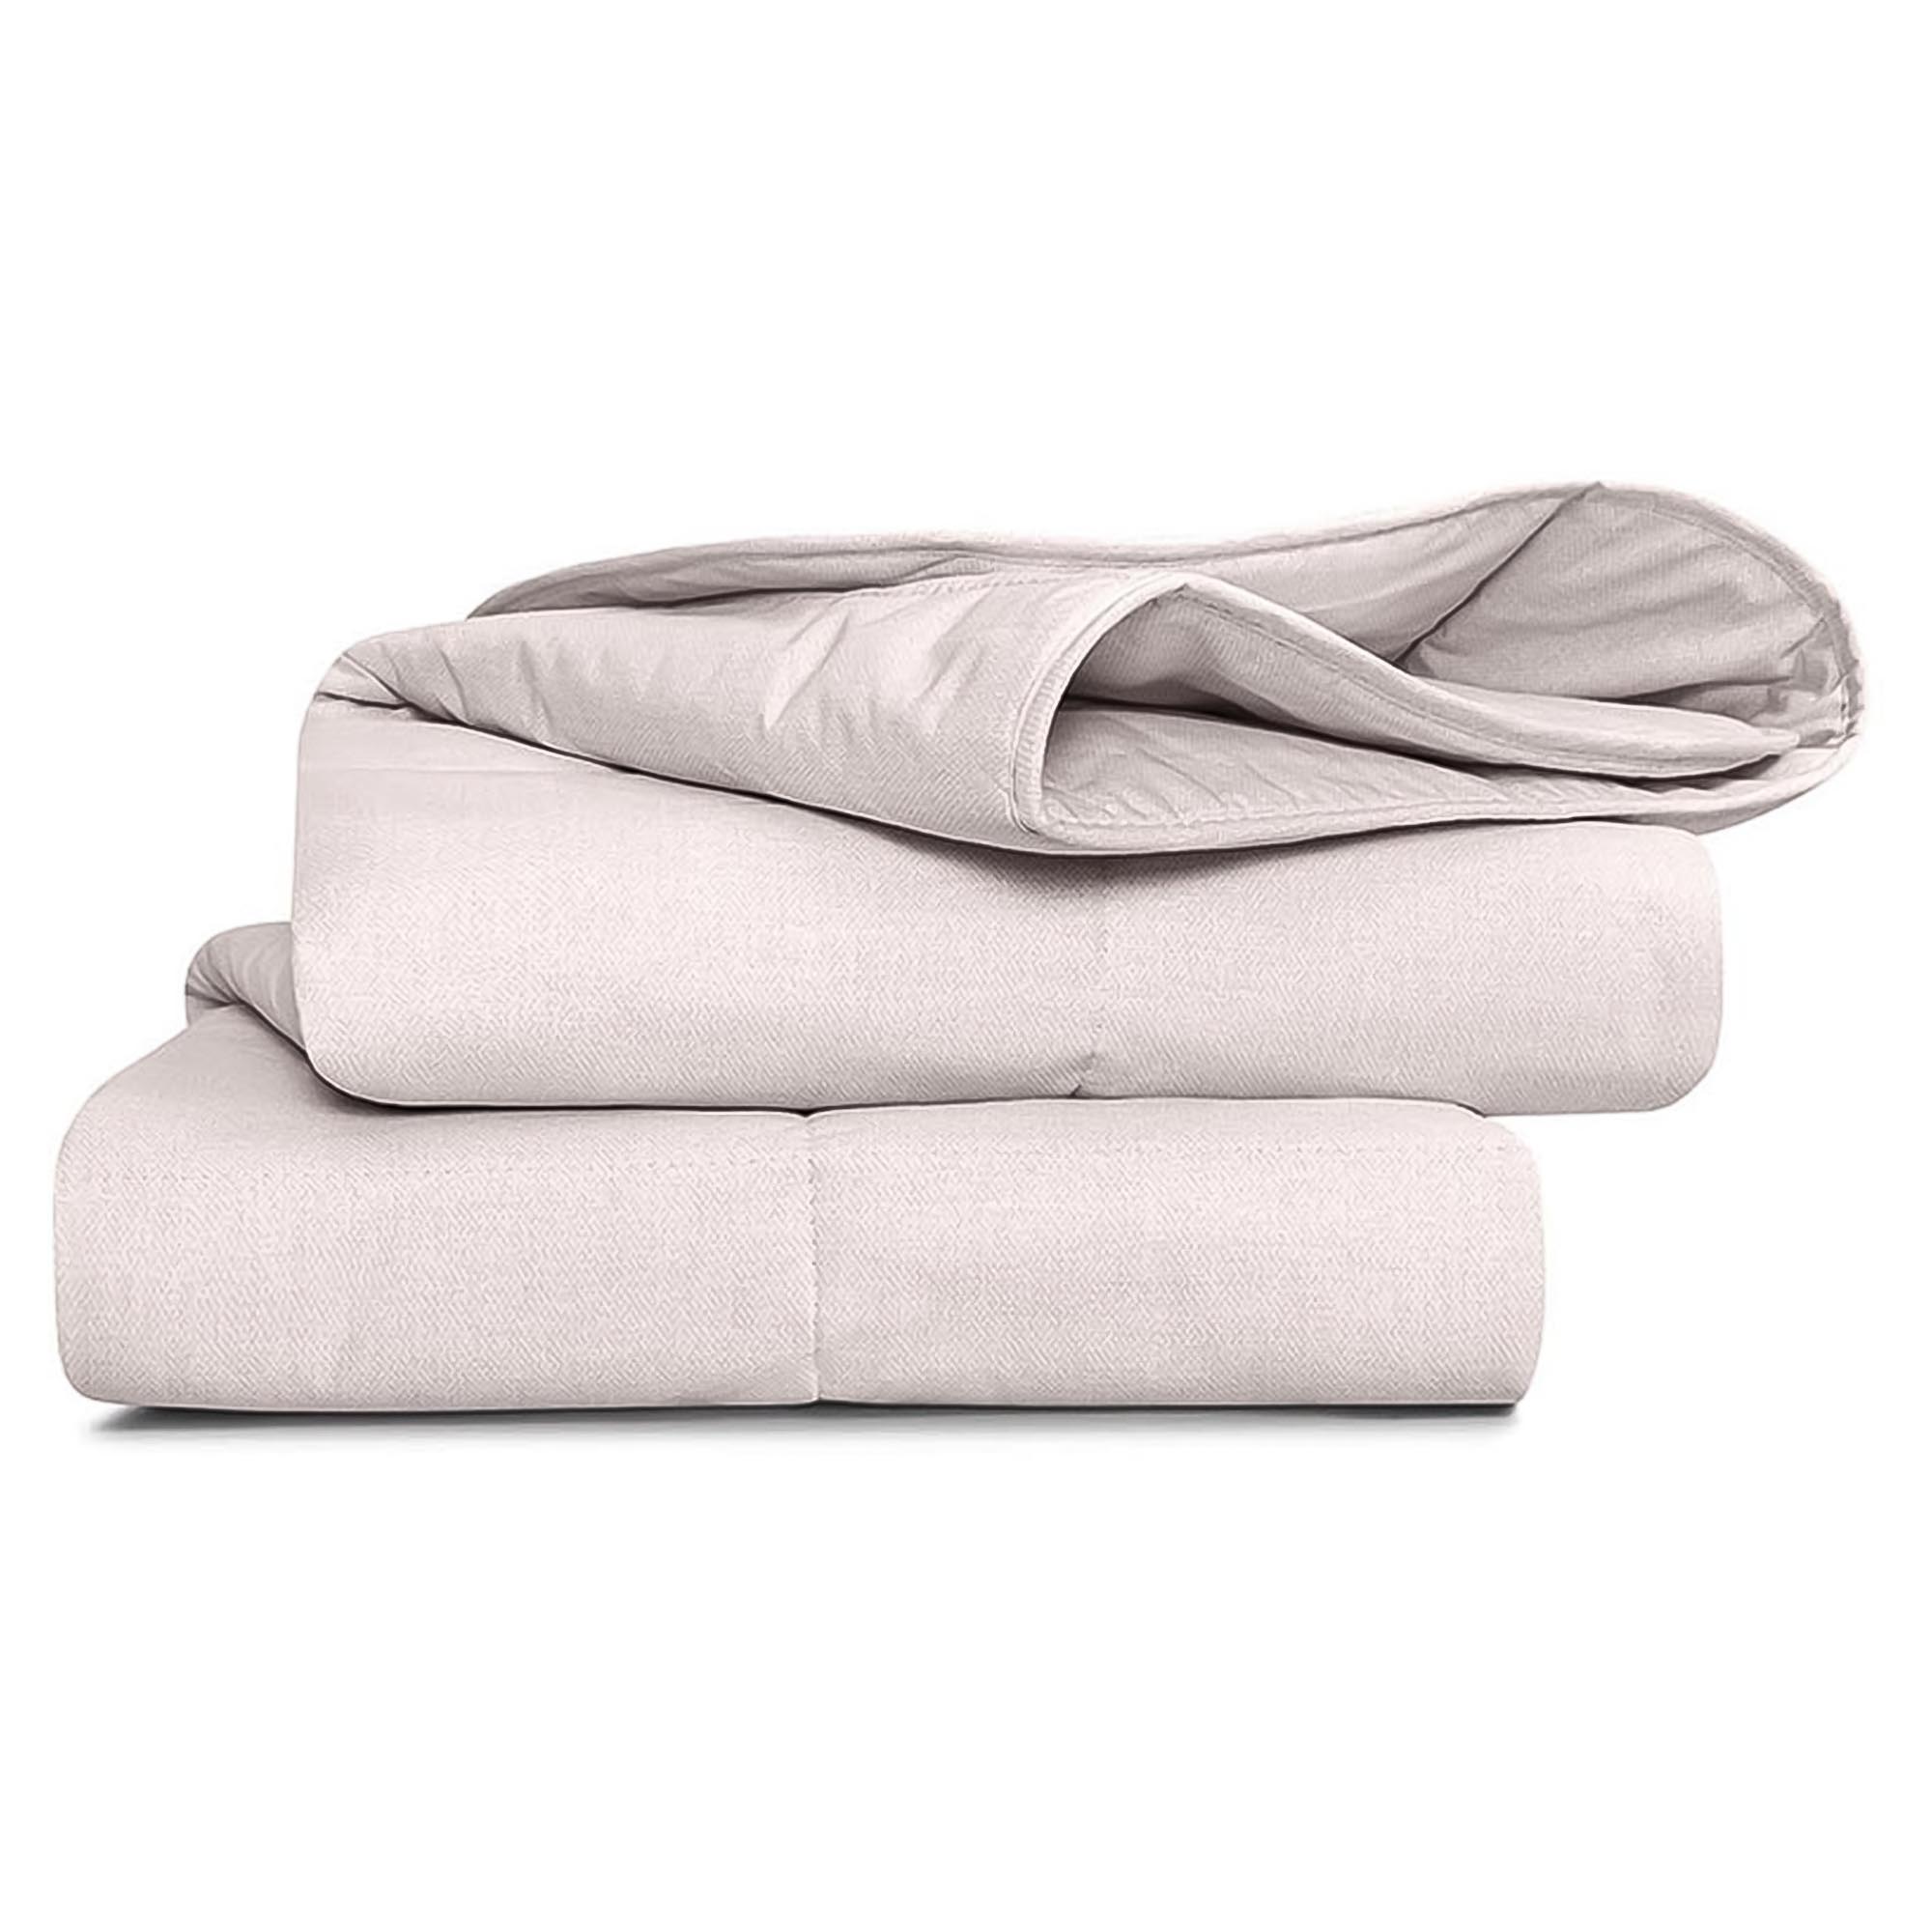 Одеяло Medsleep Sonora белое 200х210 см одеяло зимнее medsleep swan princess белое 200х210 см